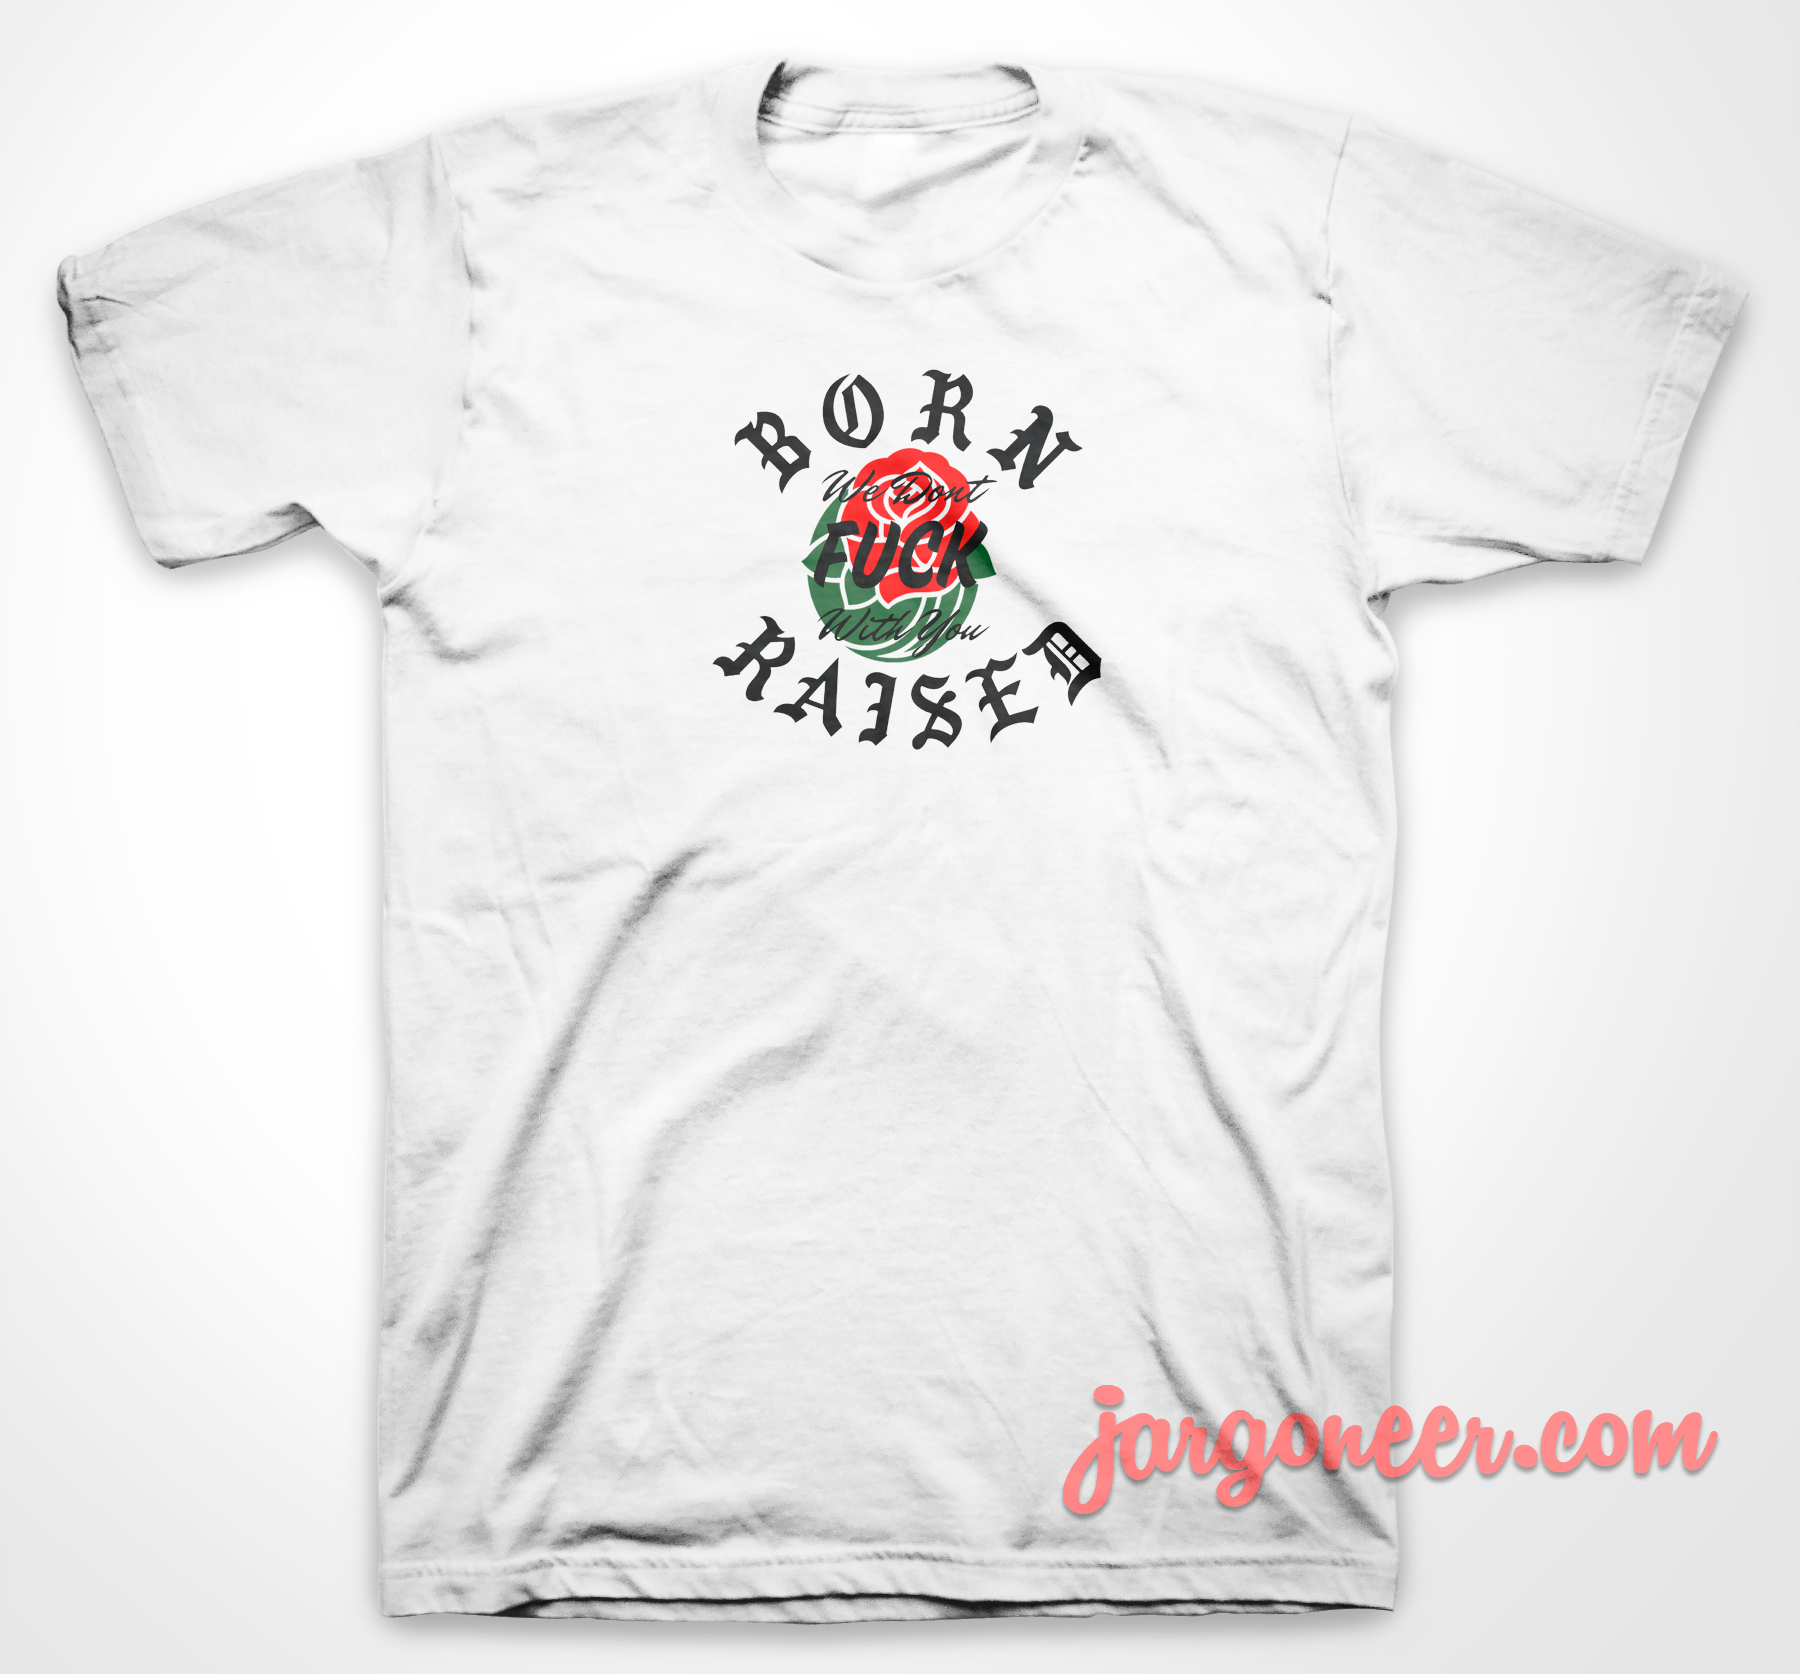 Born X Raised T-Shirt | Ideas T-Shirt | Design By jargoneer.com